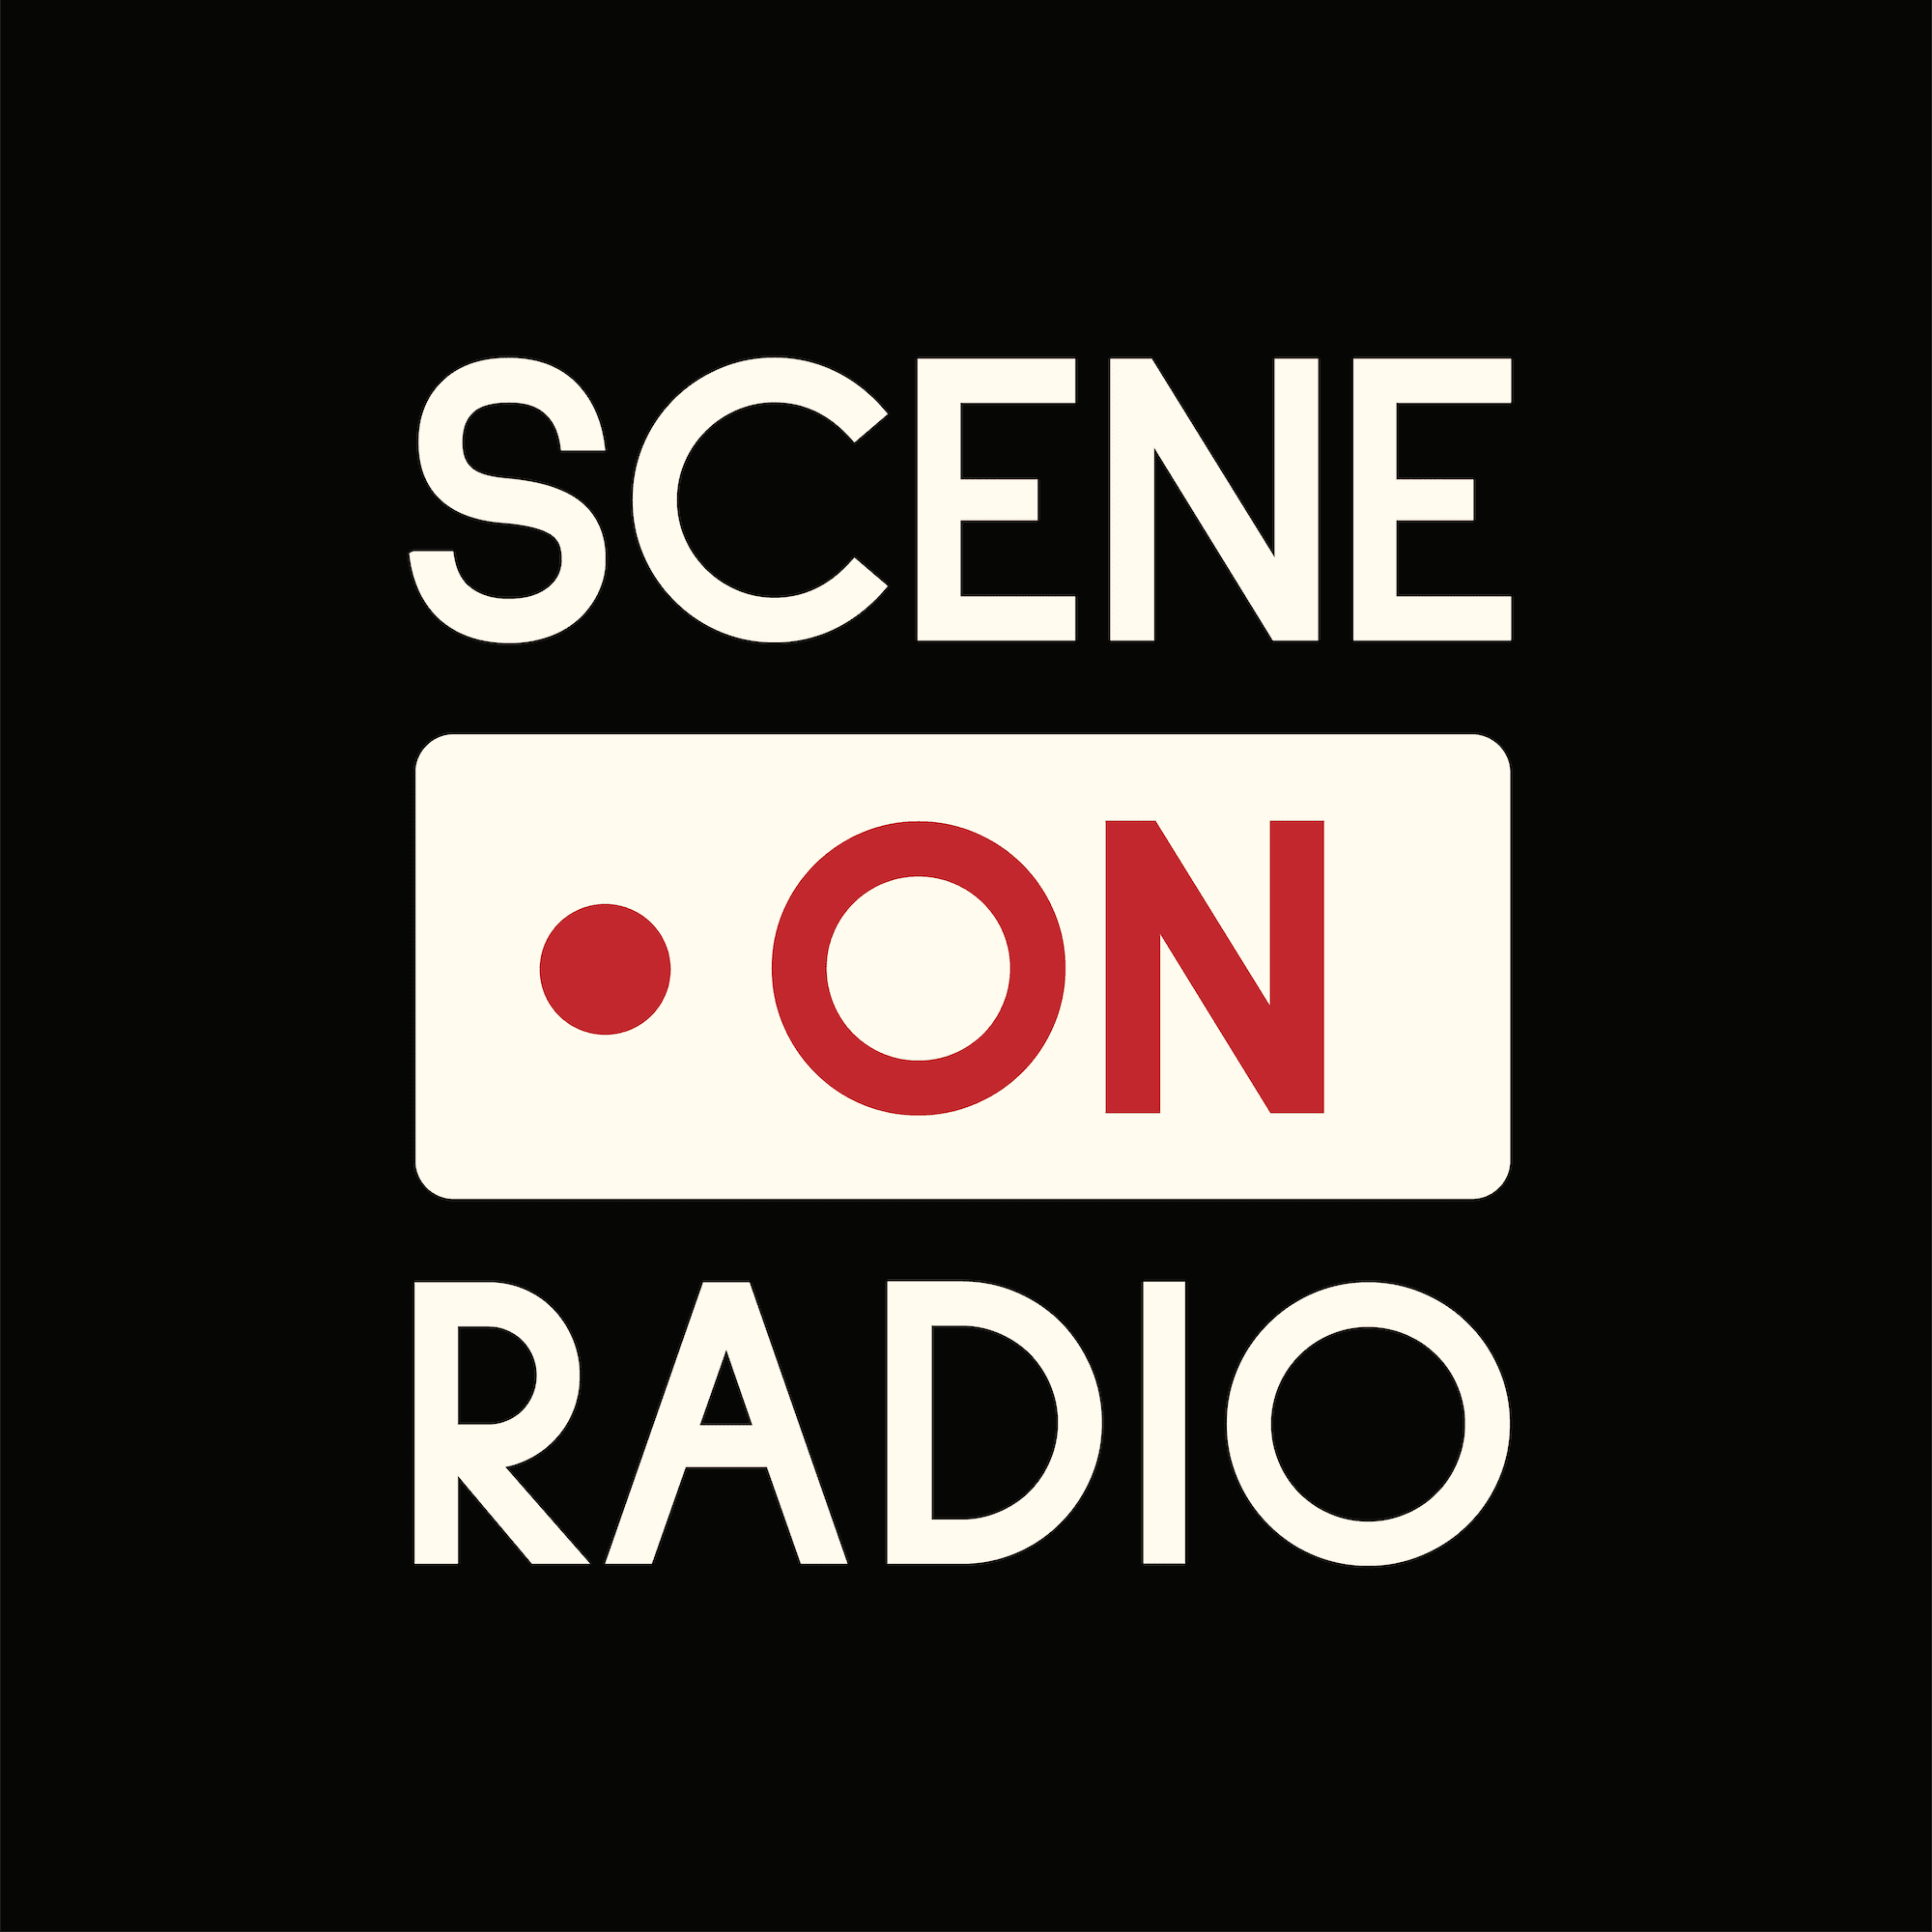 Thumbnail for "Scene on Radio Season 3: MEN Trailer".